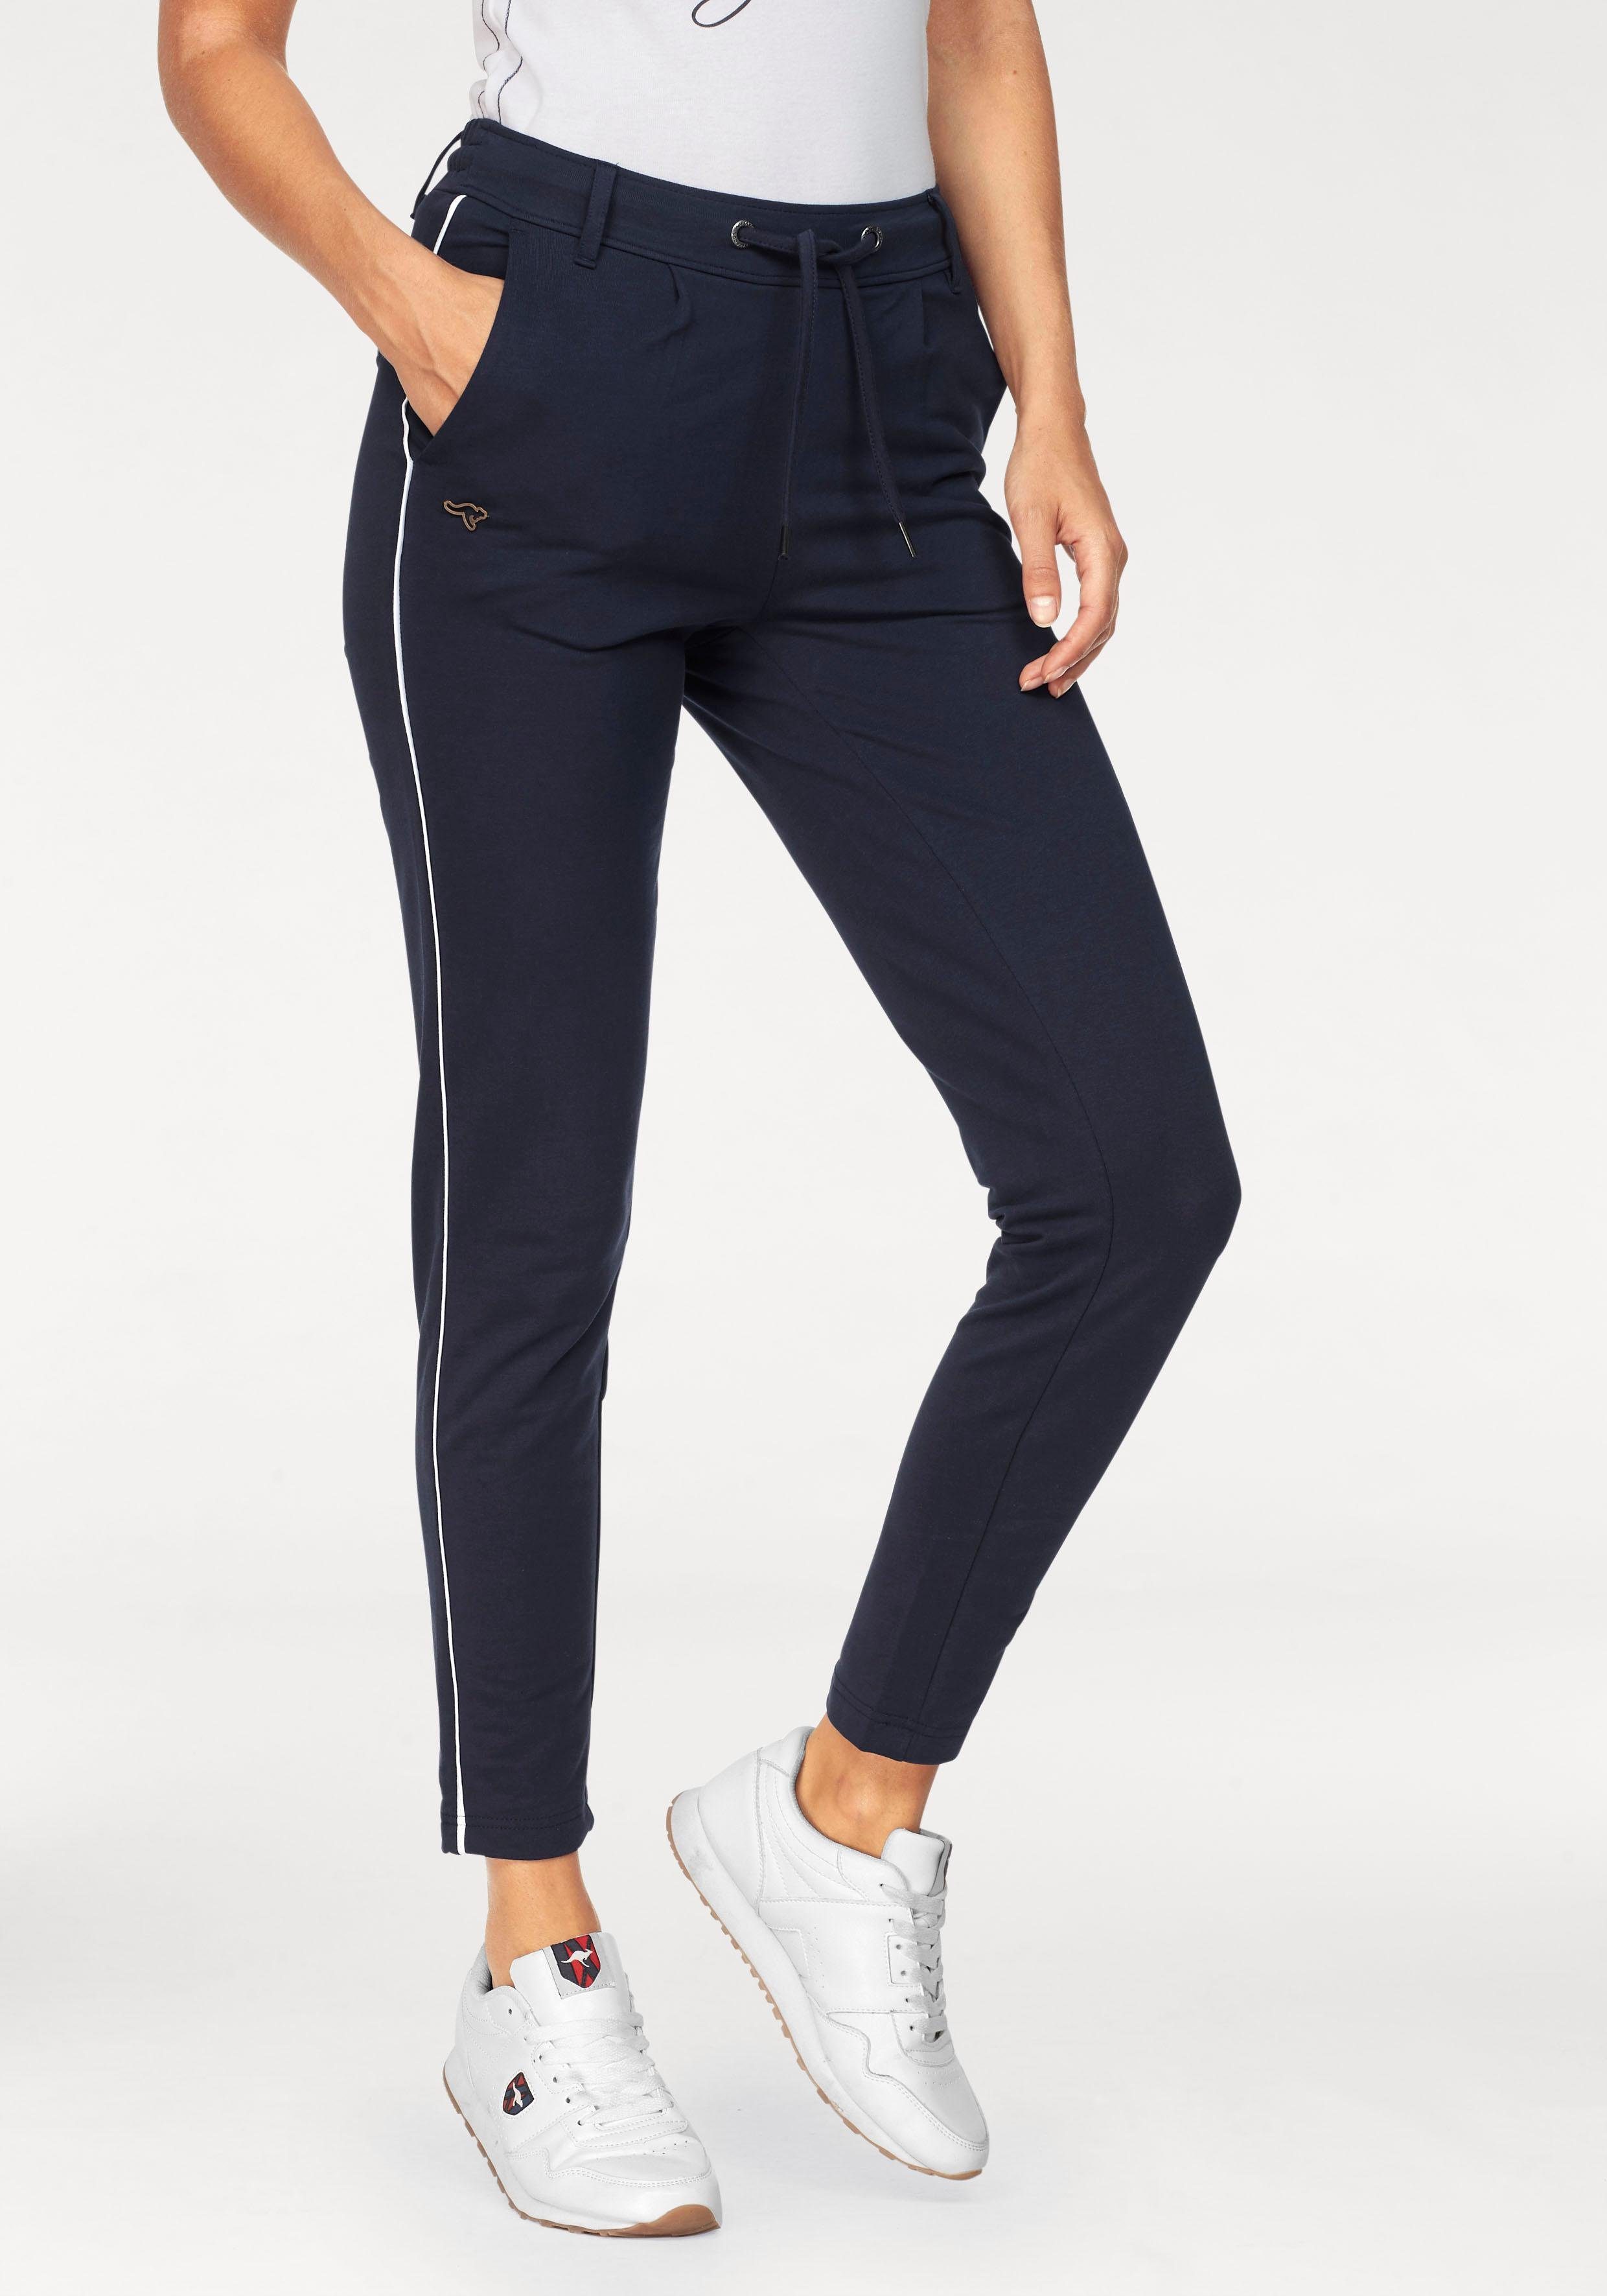 Jogger Pants für Damen online kaufen » Jogging Jeans | OTTO